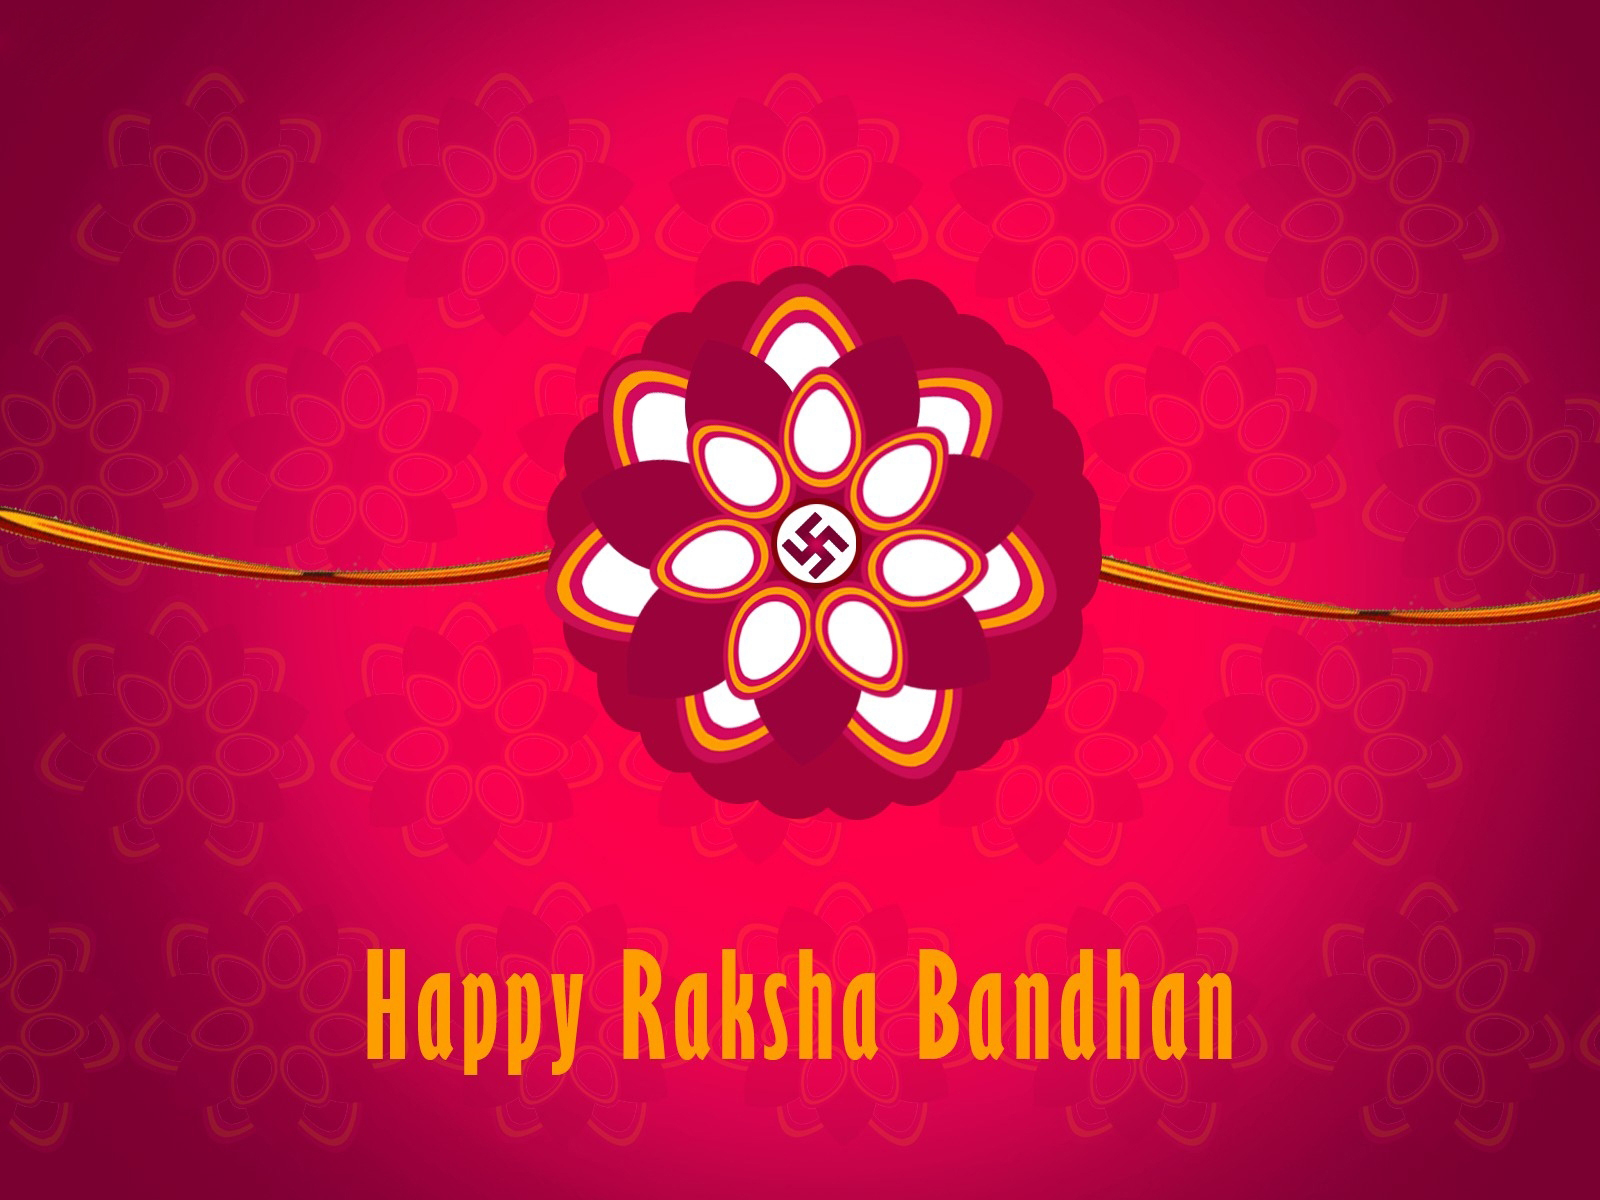 Raksha Bandhan A Bond Of Love - HD Wallpaper 